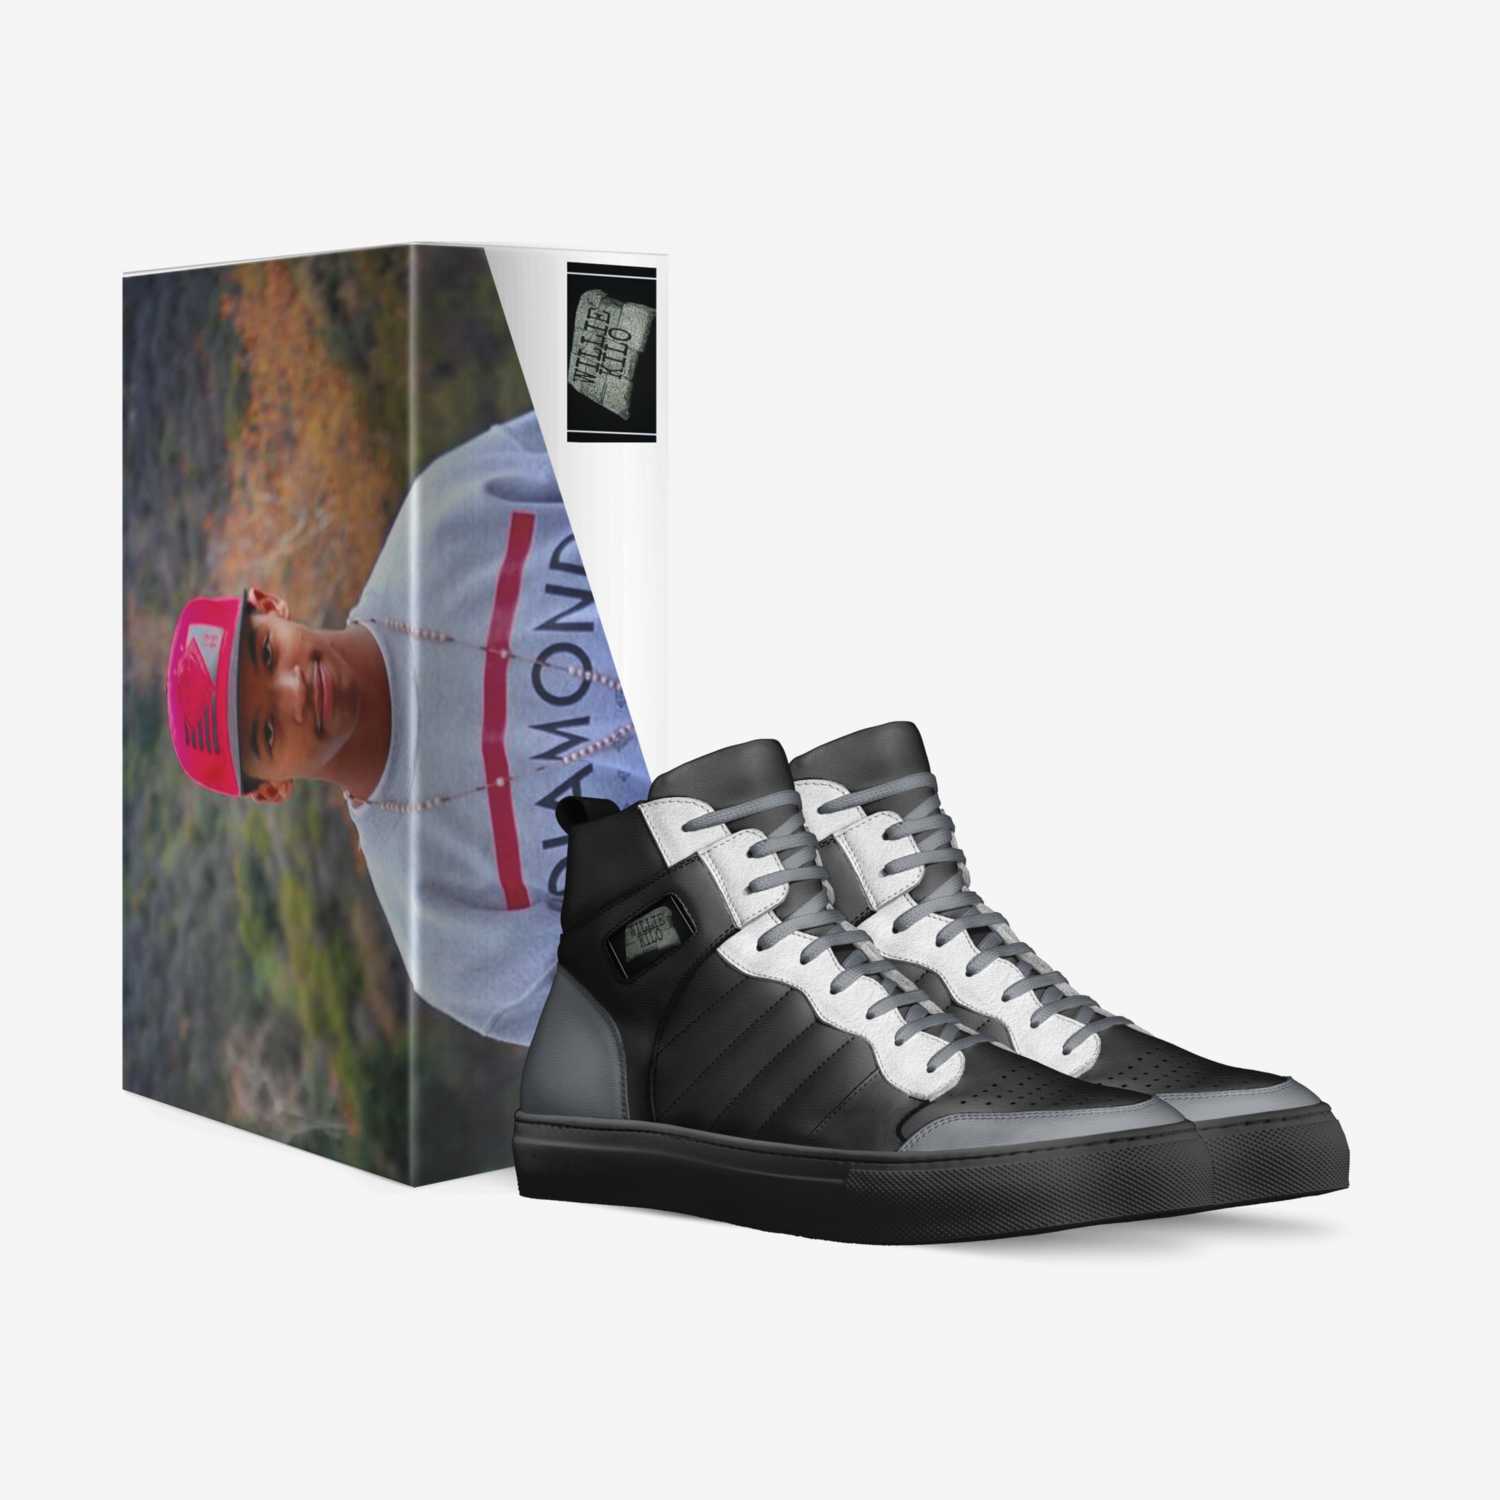 LAKONO- WESTSIDE custom made in Italy shoes by Jason Bethea-settle | Box view